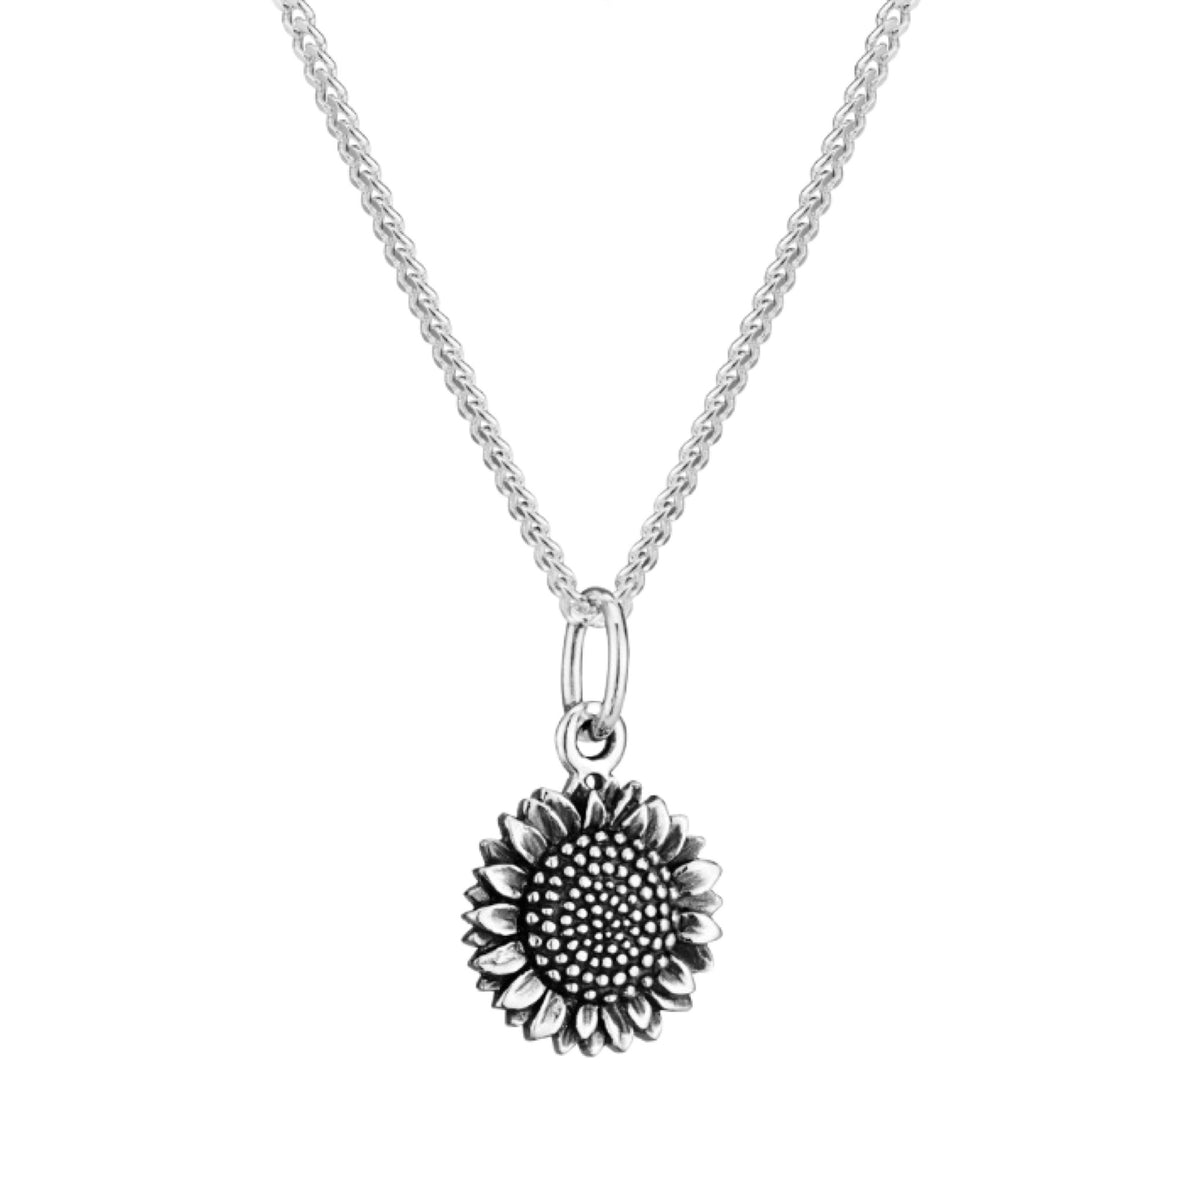 Sterling silver sunflower boho summer necklace alternative jewellery jewelry